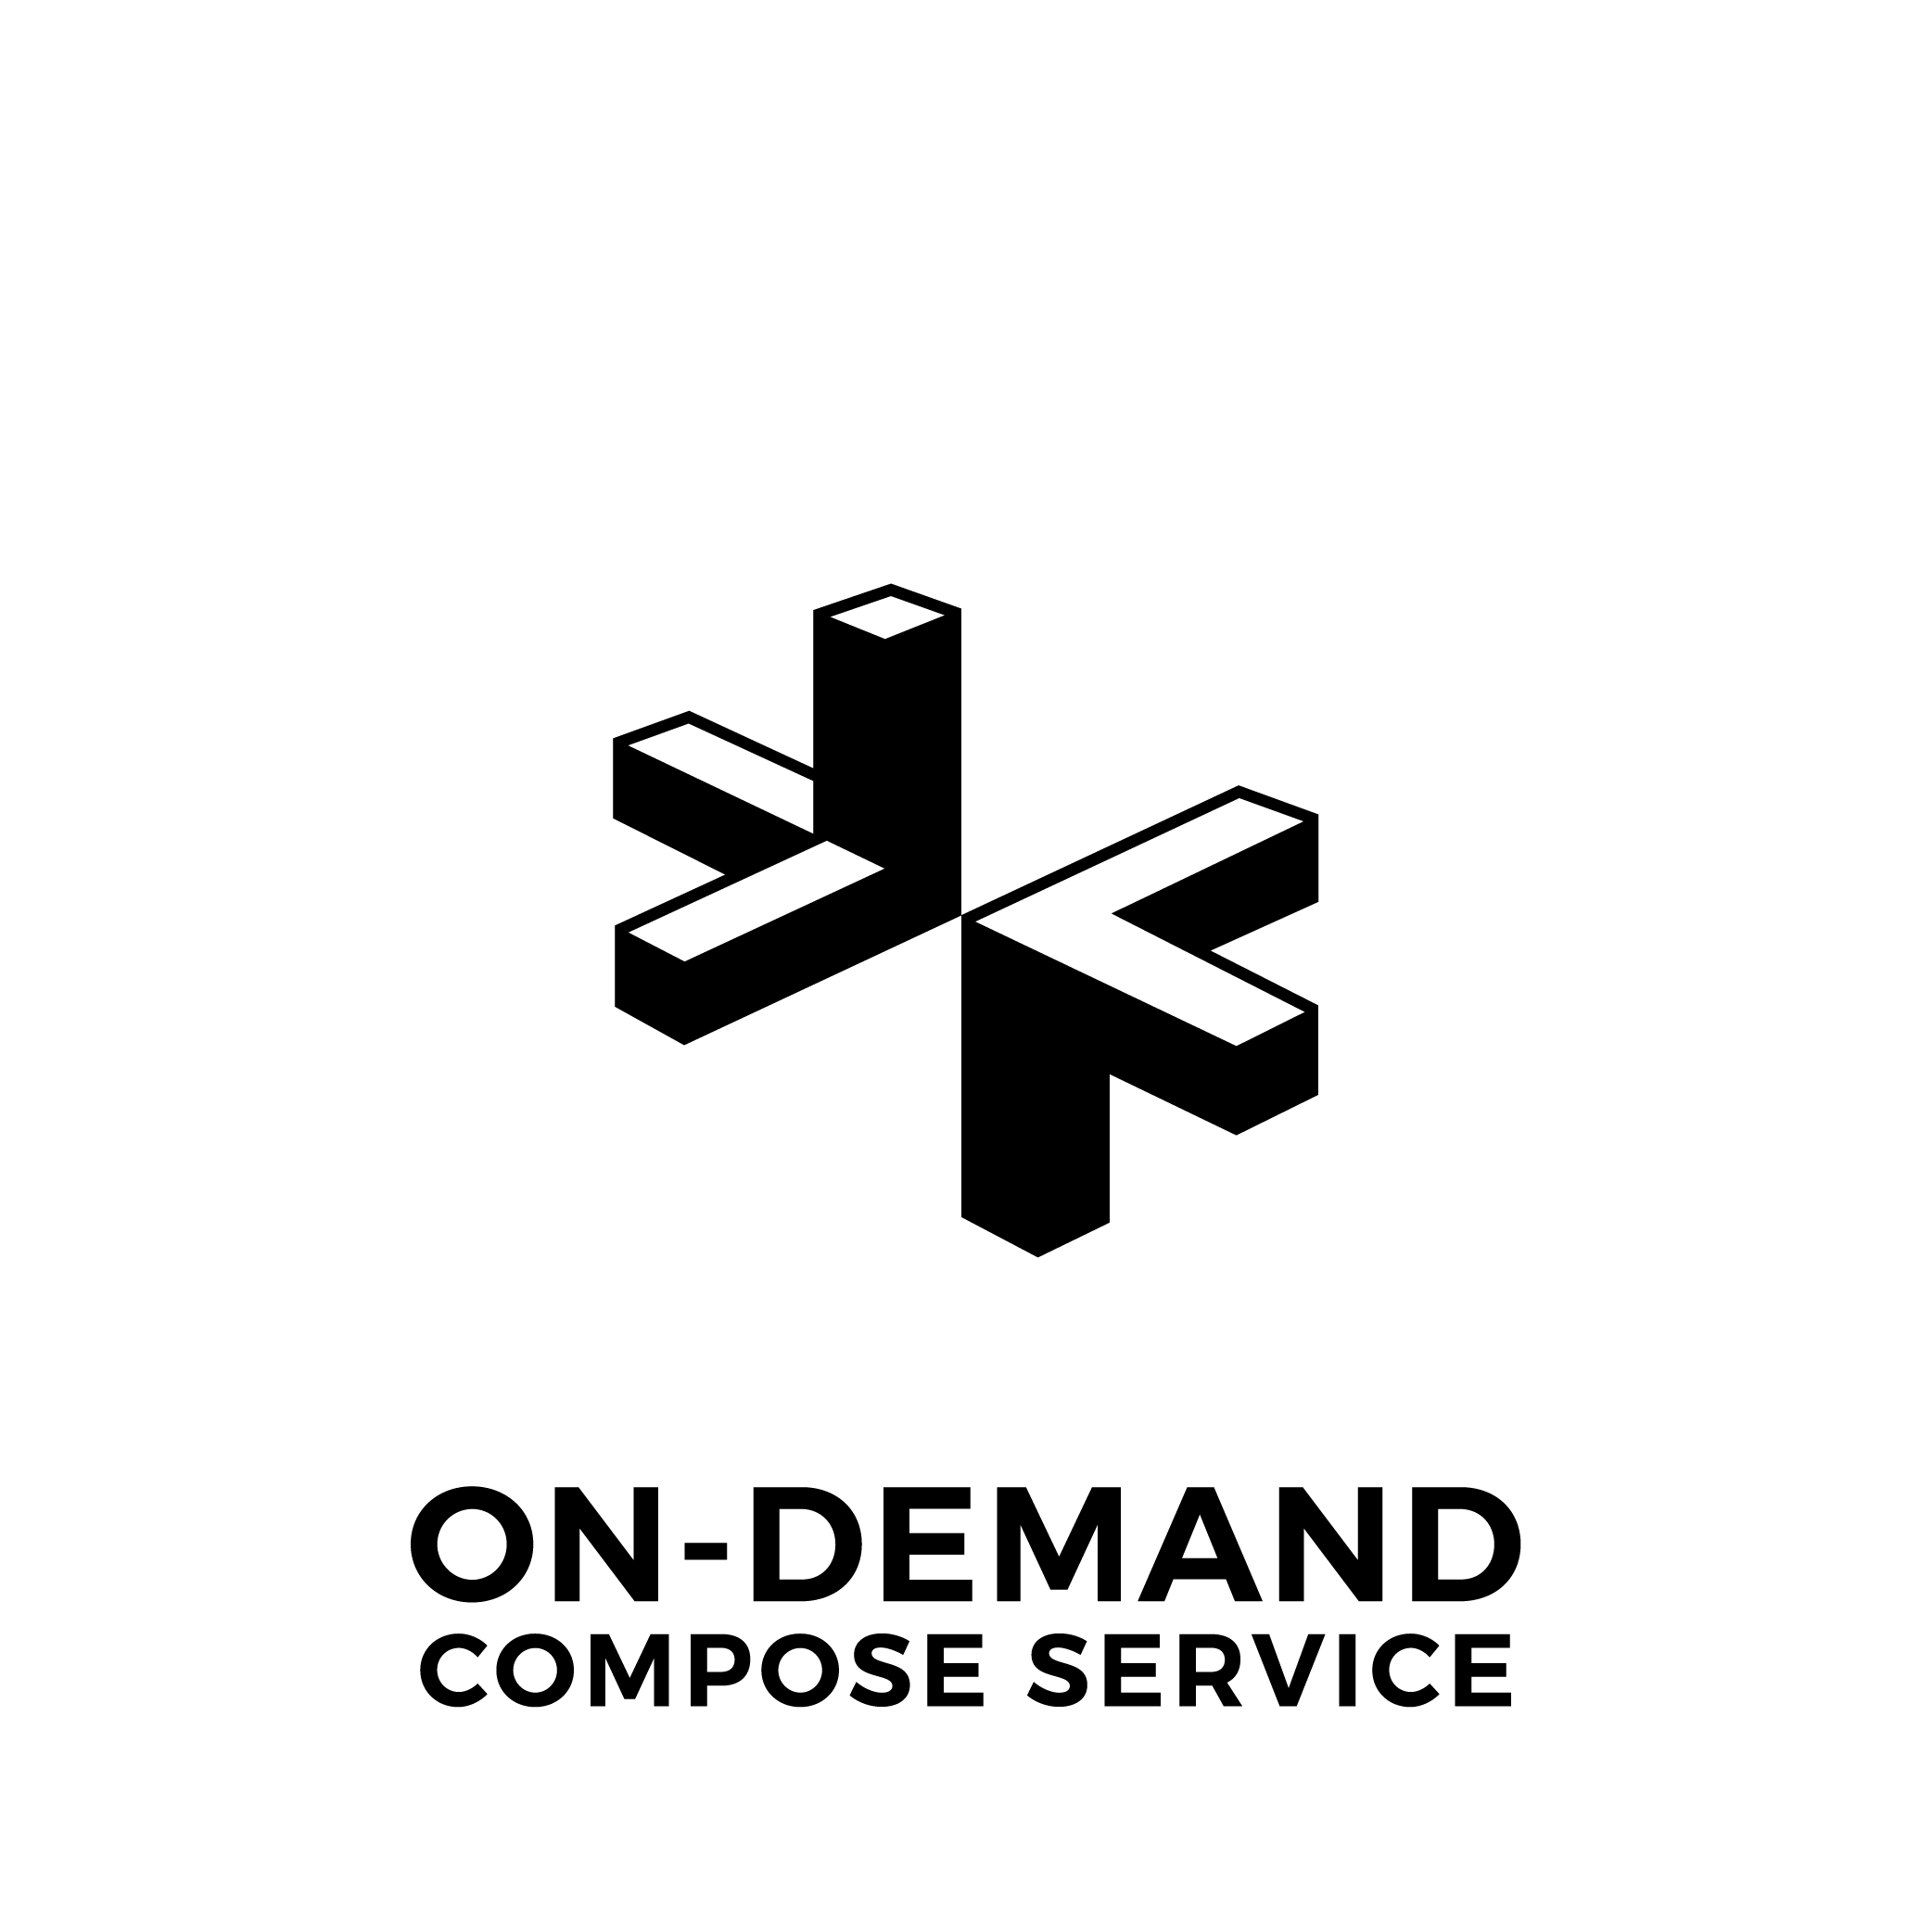 ODCS logo - black